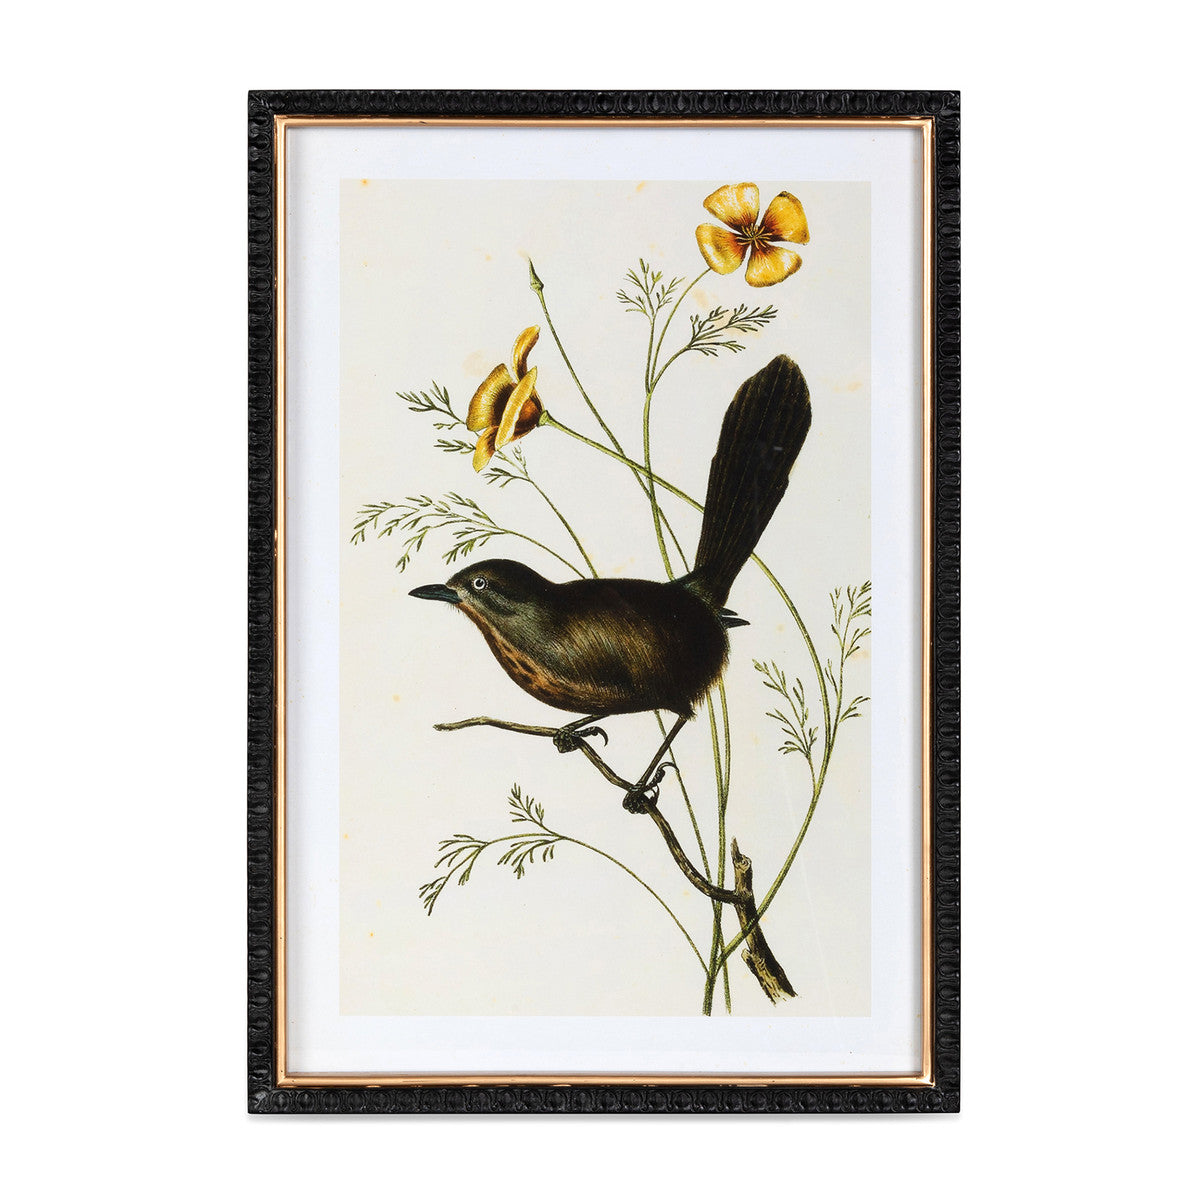 Summer Bird Framed Prints - 4 Assorted Styles